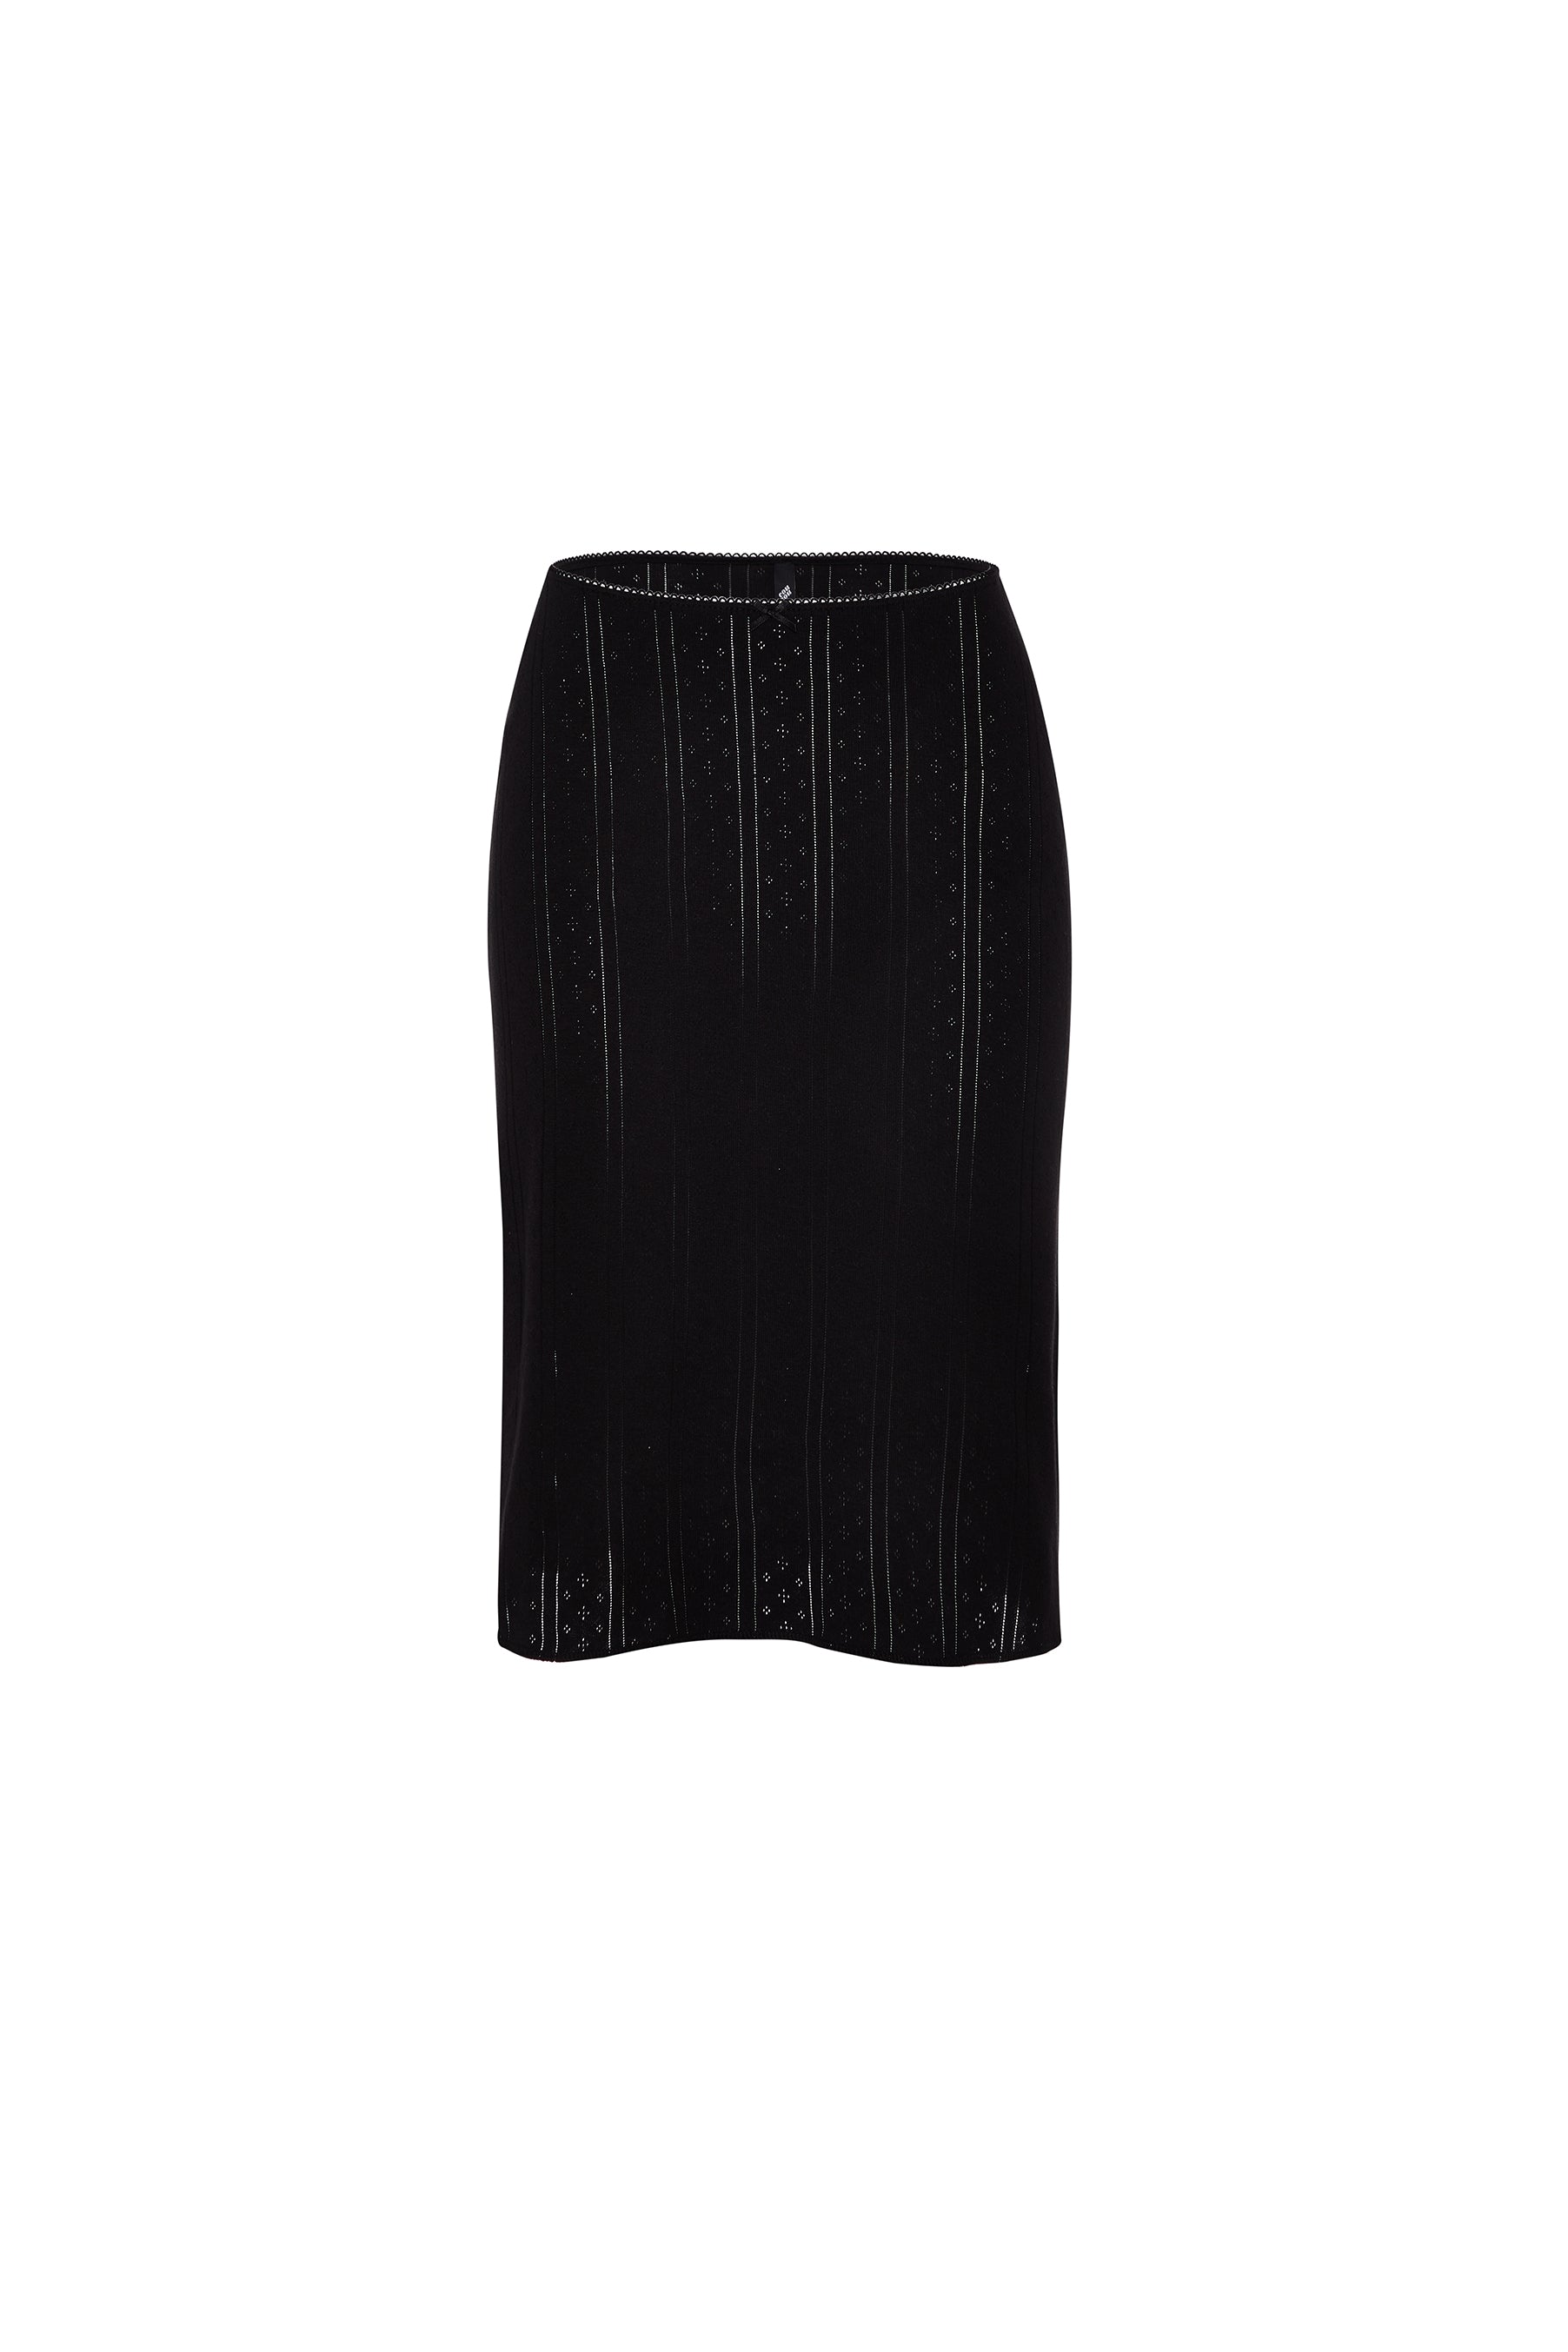 The Slip Skirt Black – Cou Cou Intimates